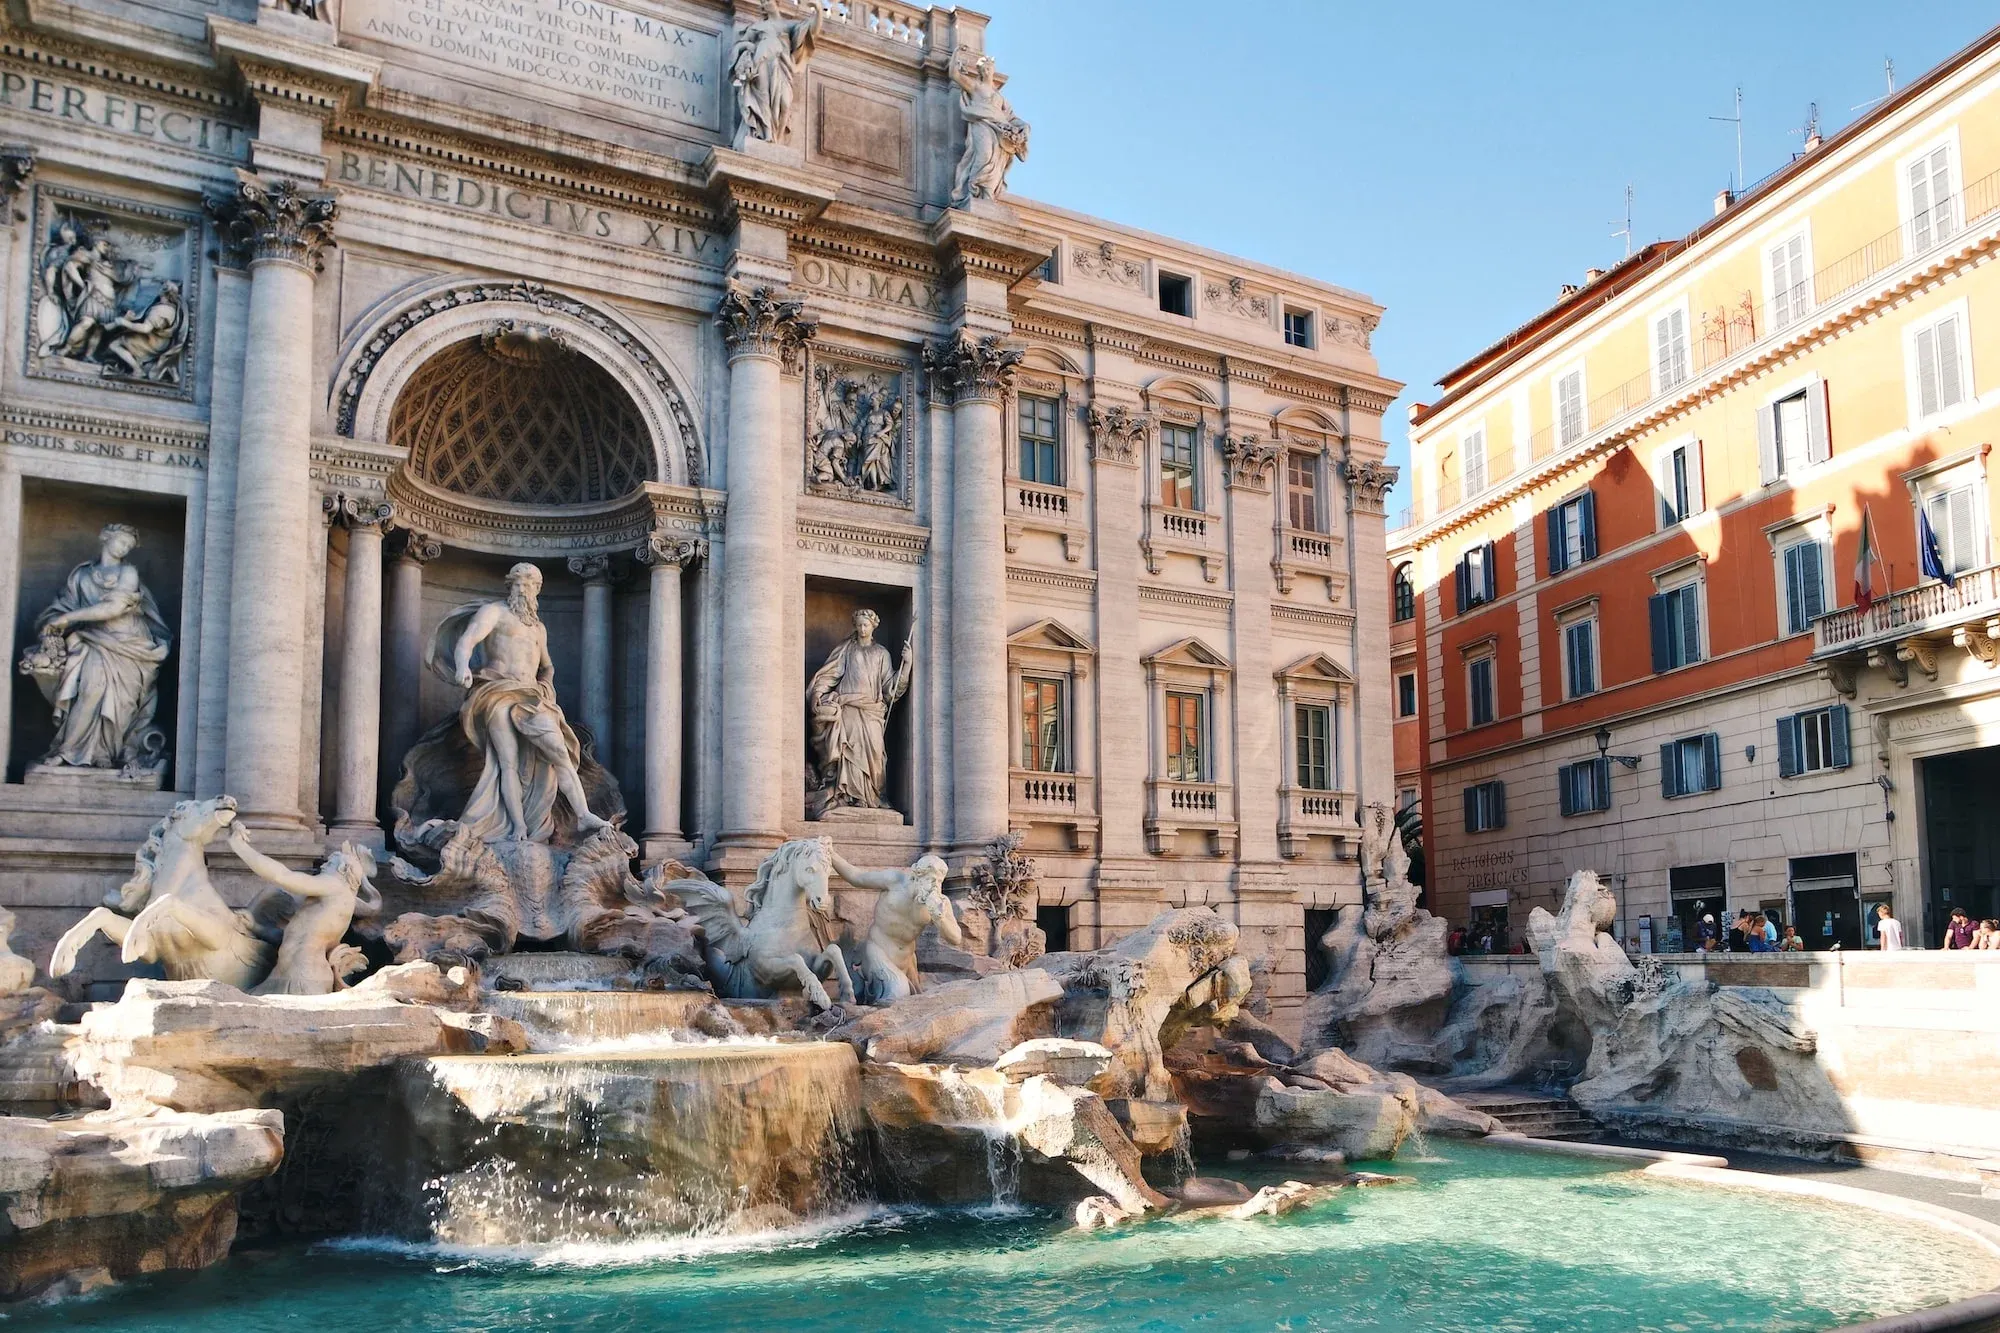 Image of Fontana di Trevi ijn Rome, Italy